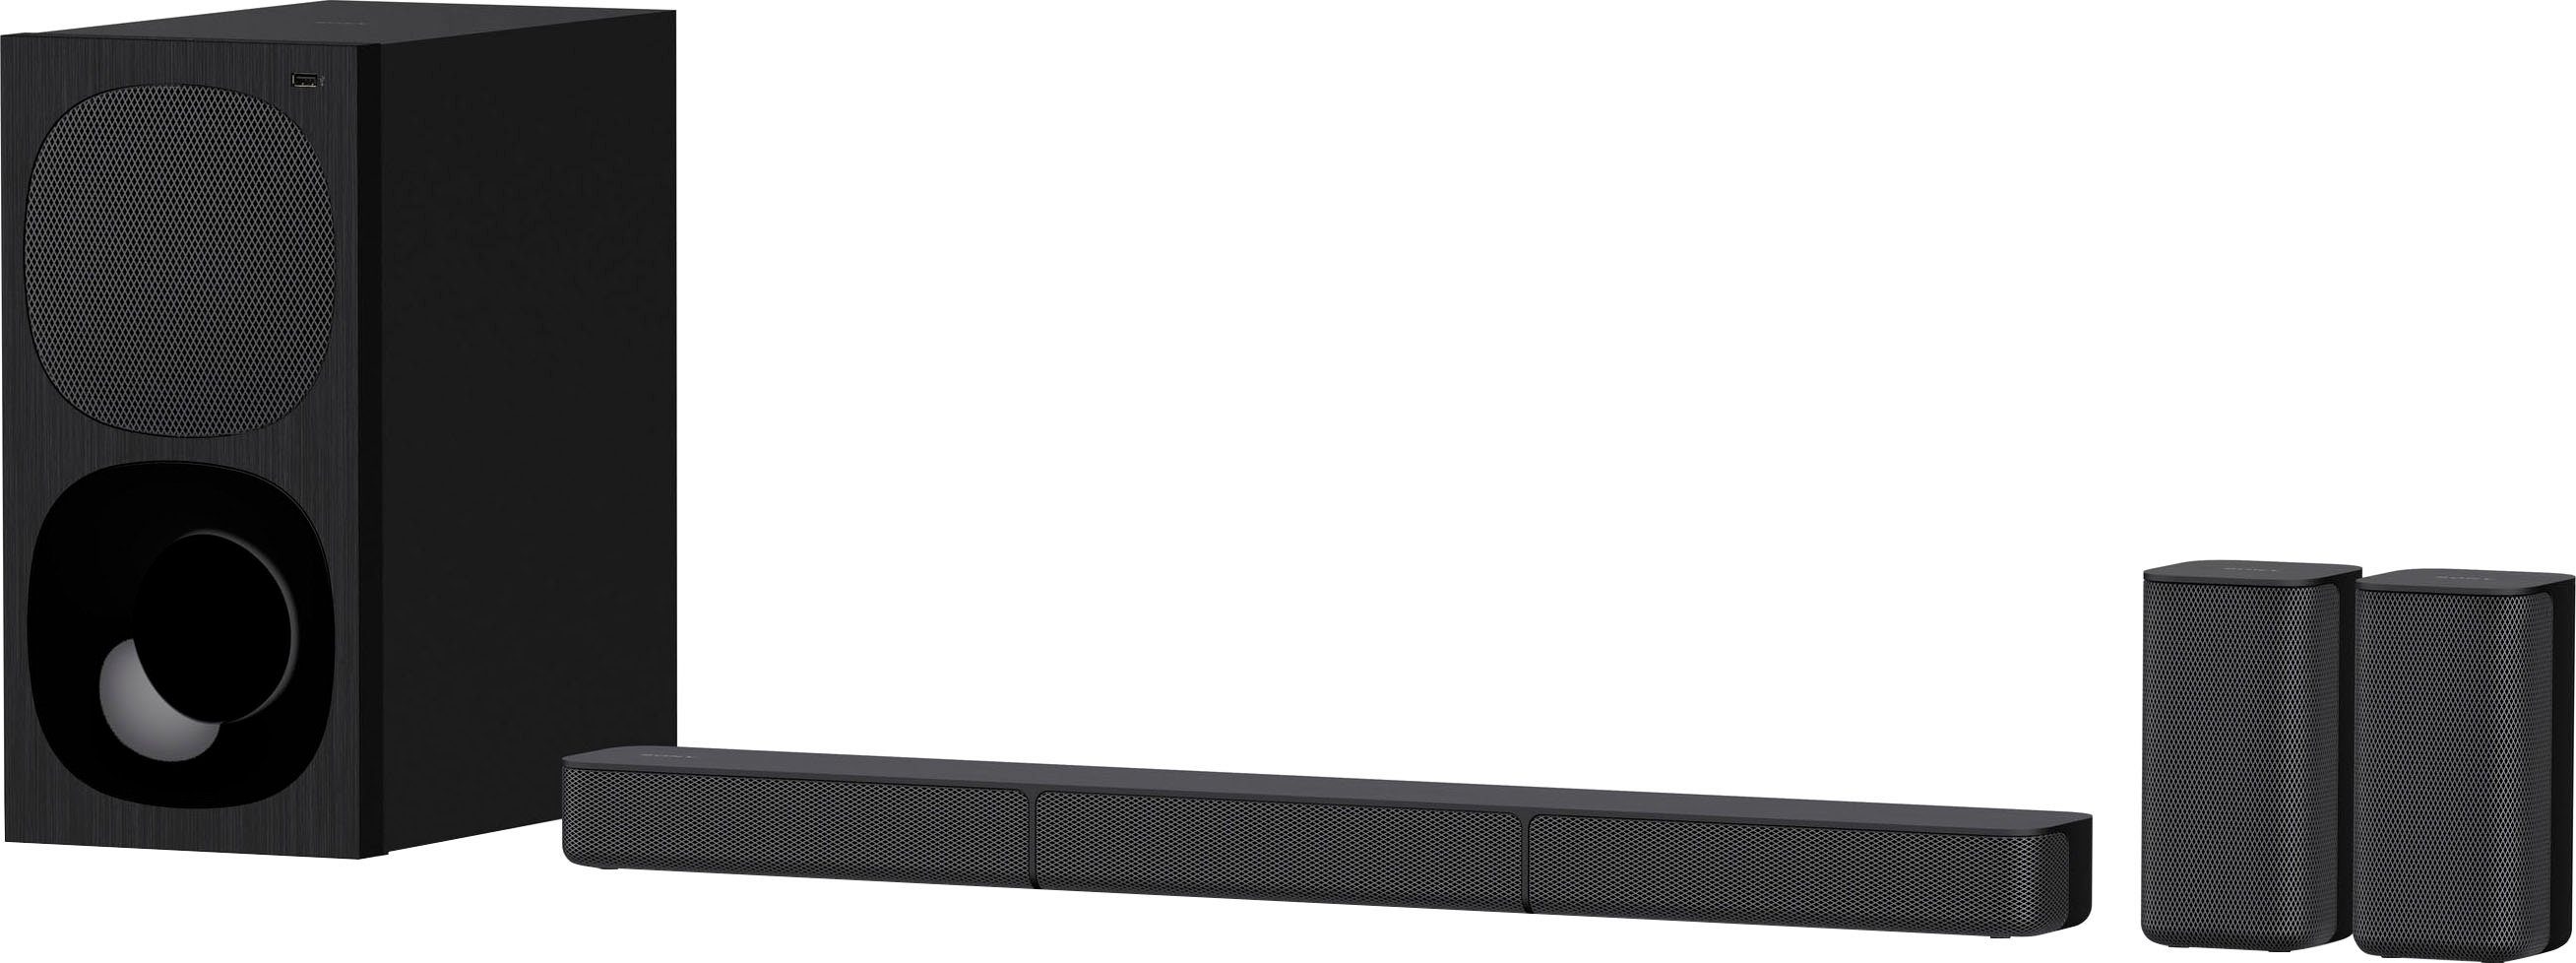 Sony HT-S20R Kanal TV 5.1 Soundbar (Bluetooth, 400 W, Subwoofer, Surround  Sound, Dolby Digital)